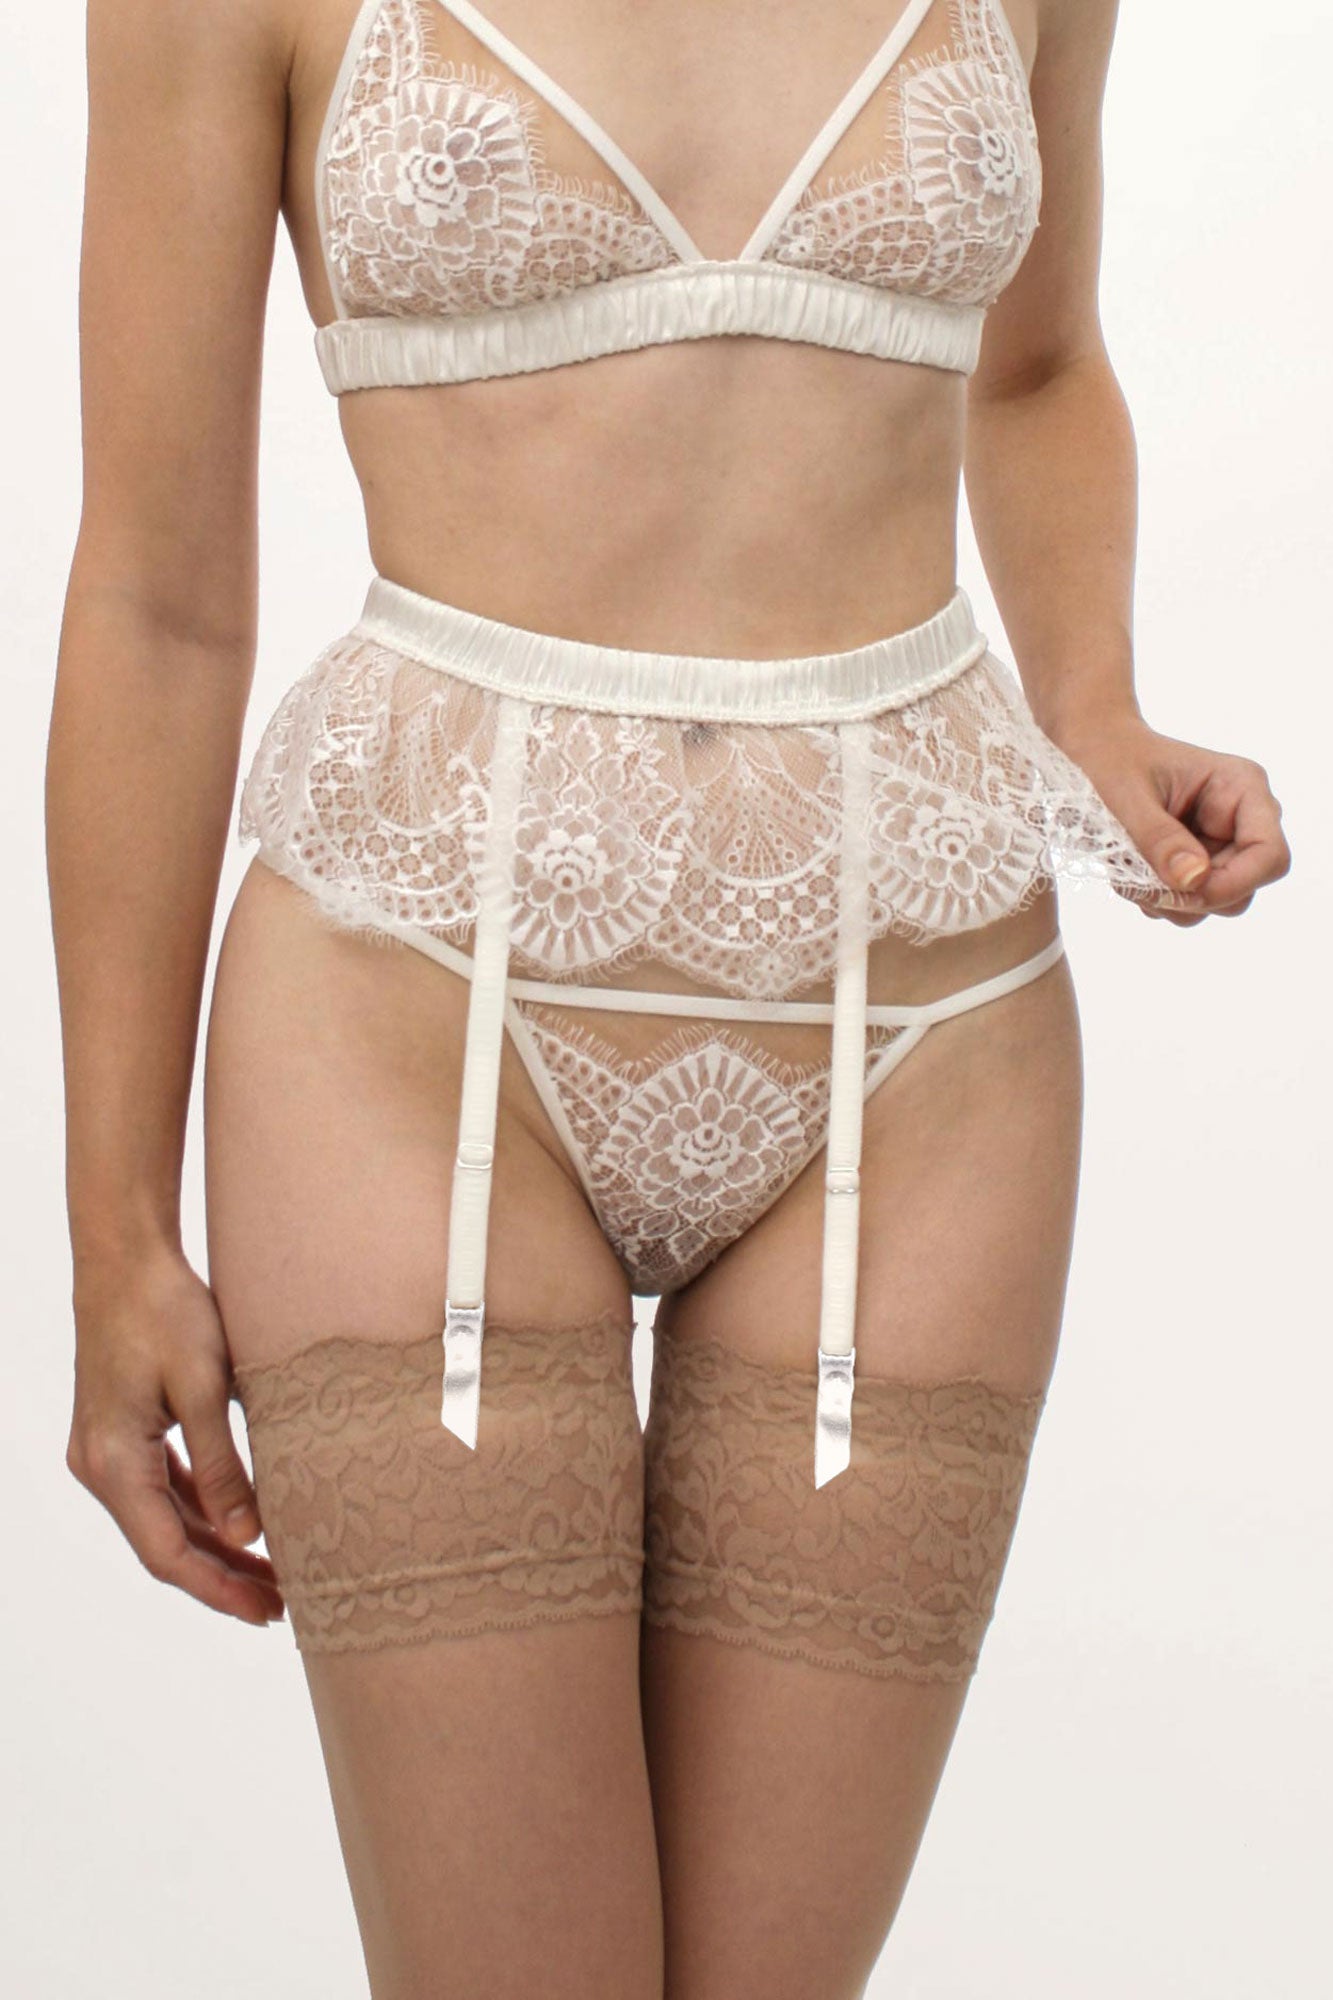 White lace bralettes Luxury, vintage-inspired lingerie image